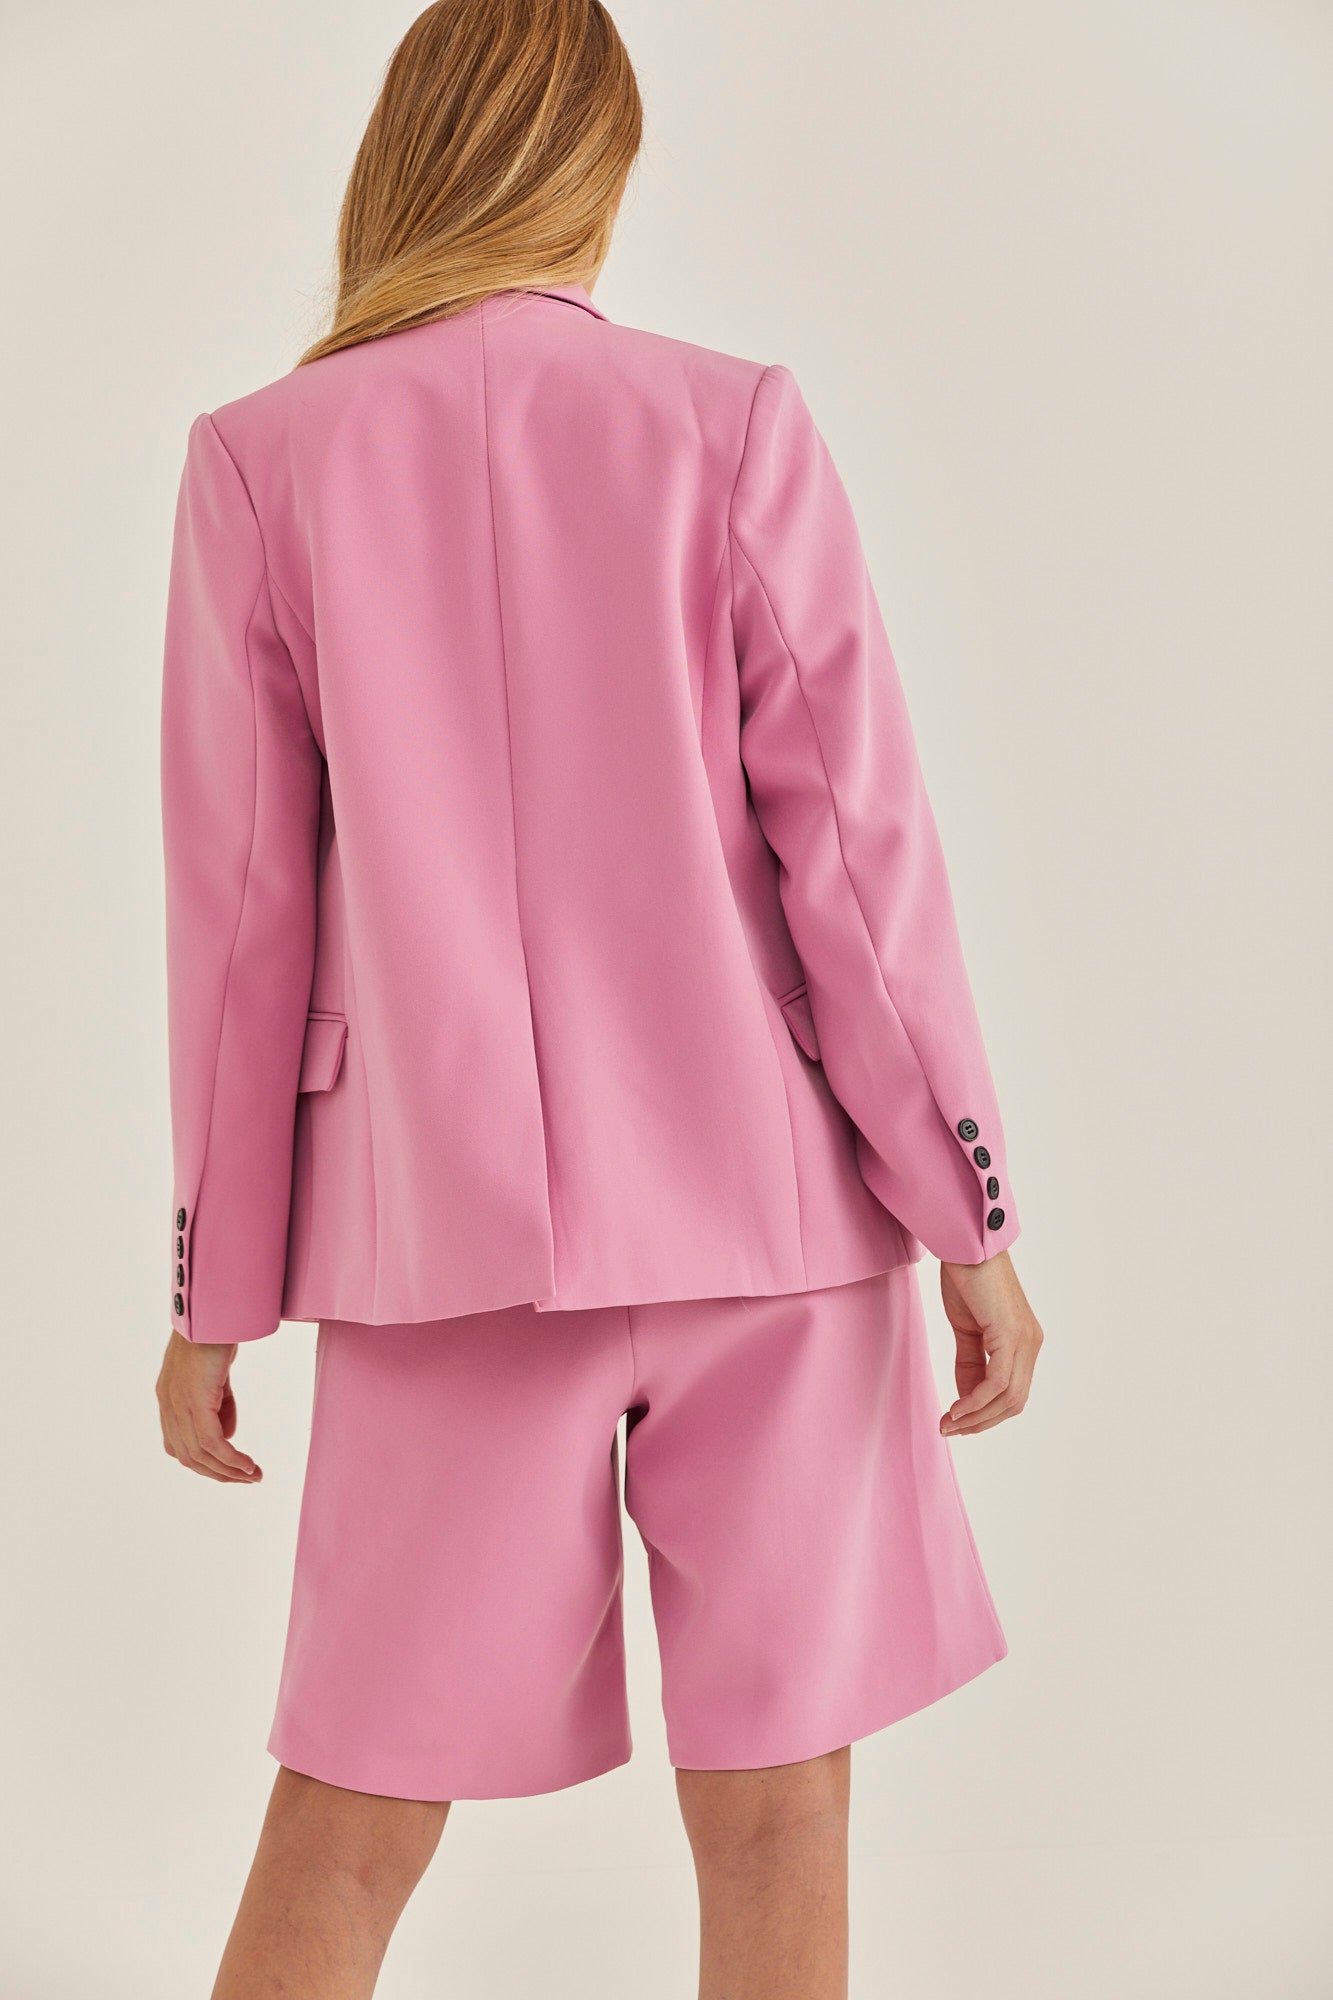 Kylie Pink Suit Jacket